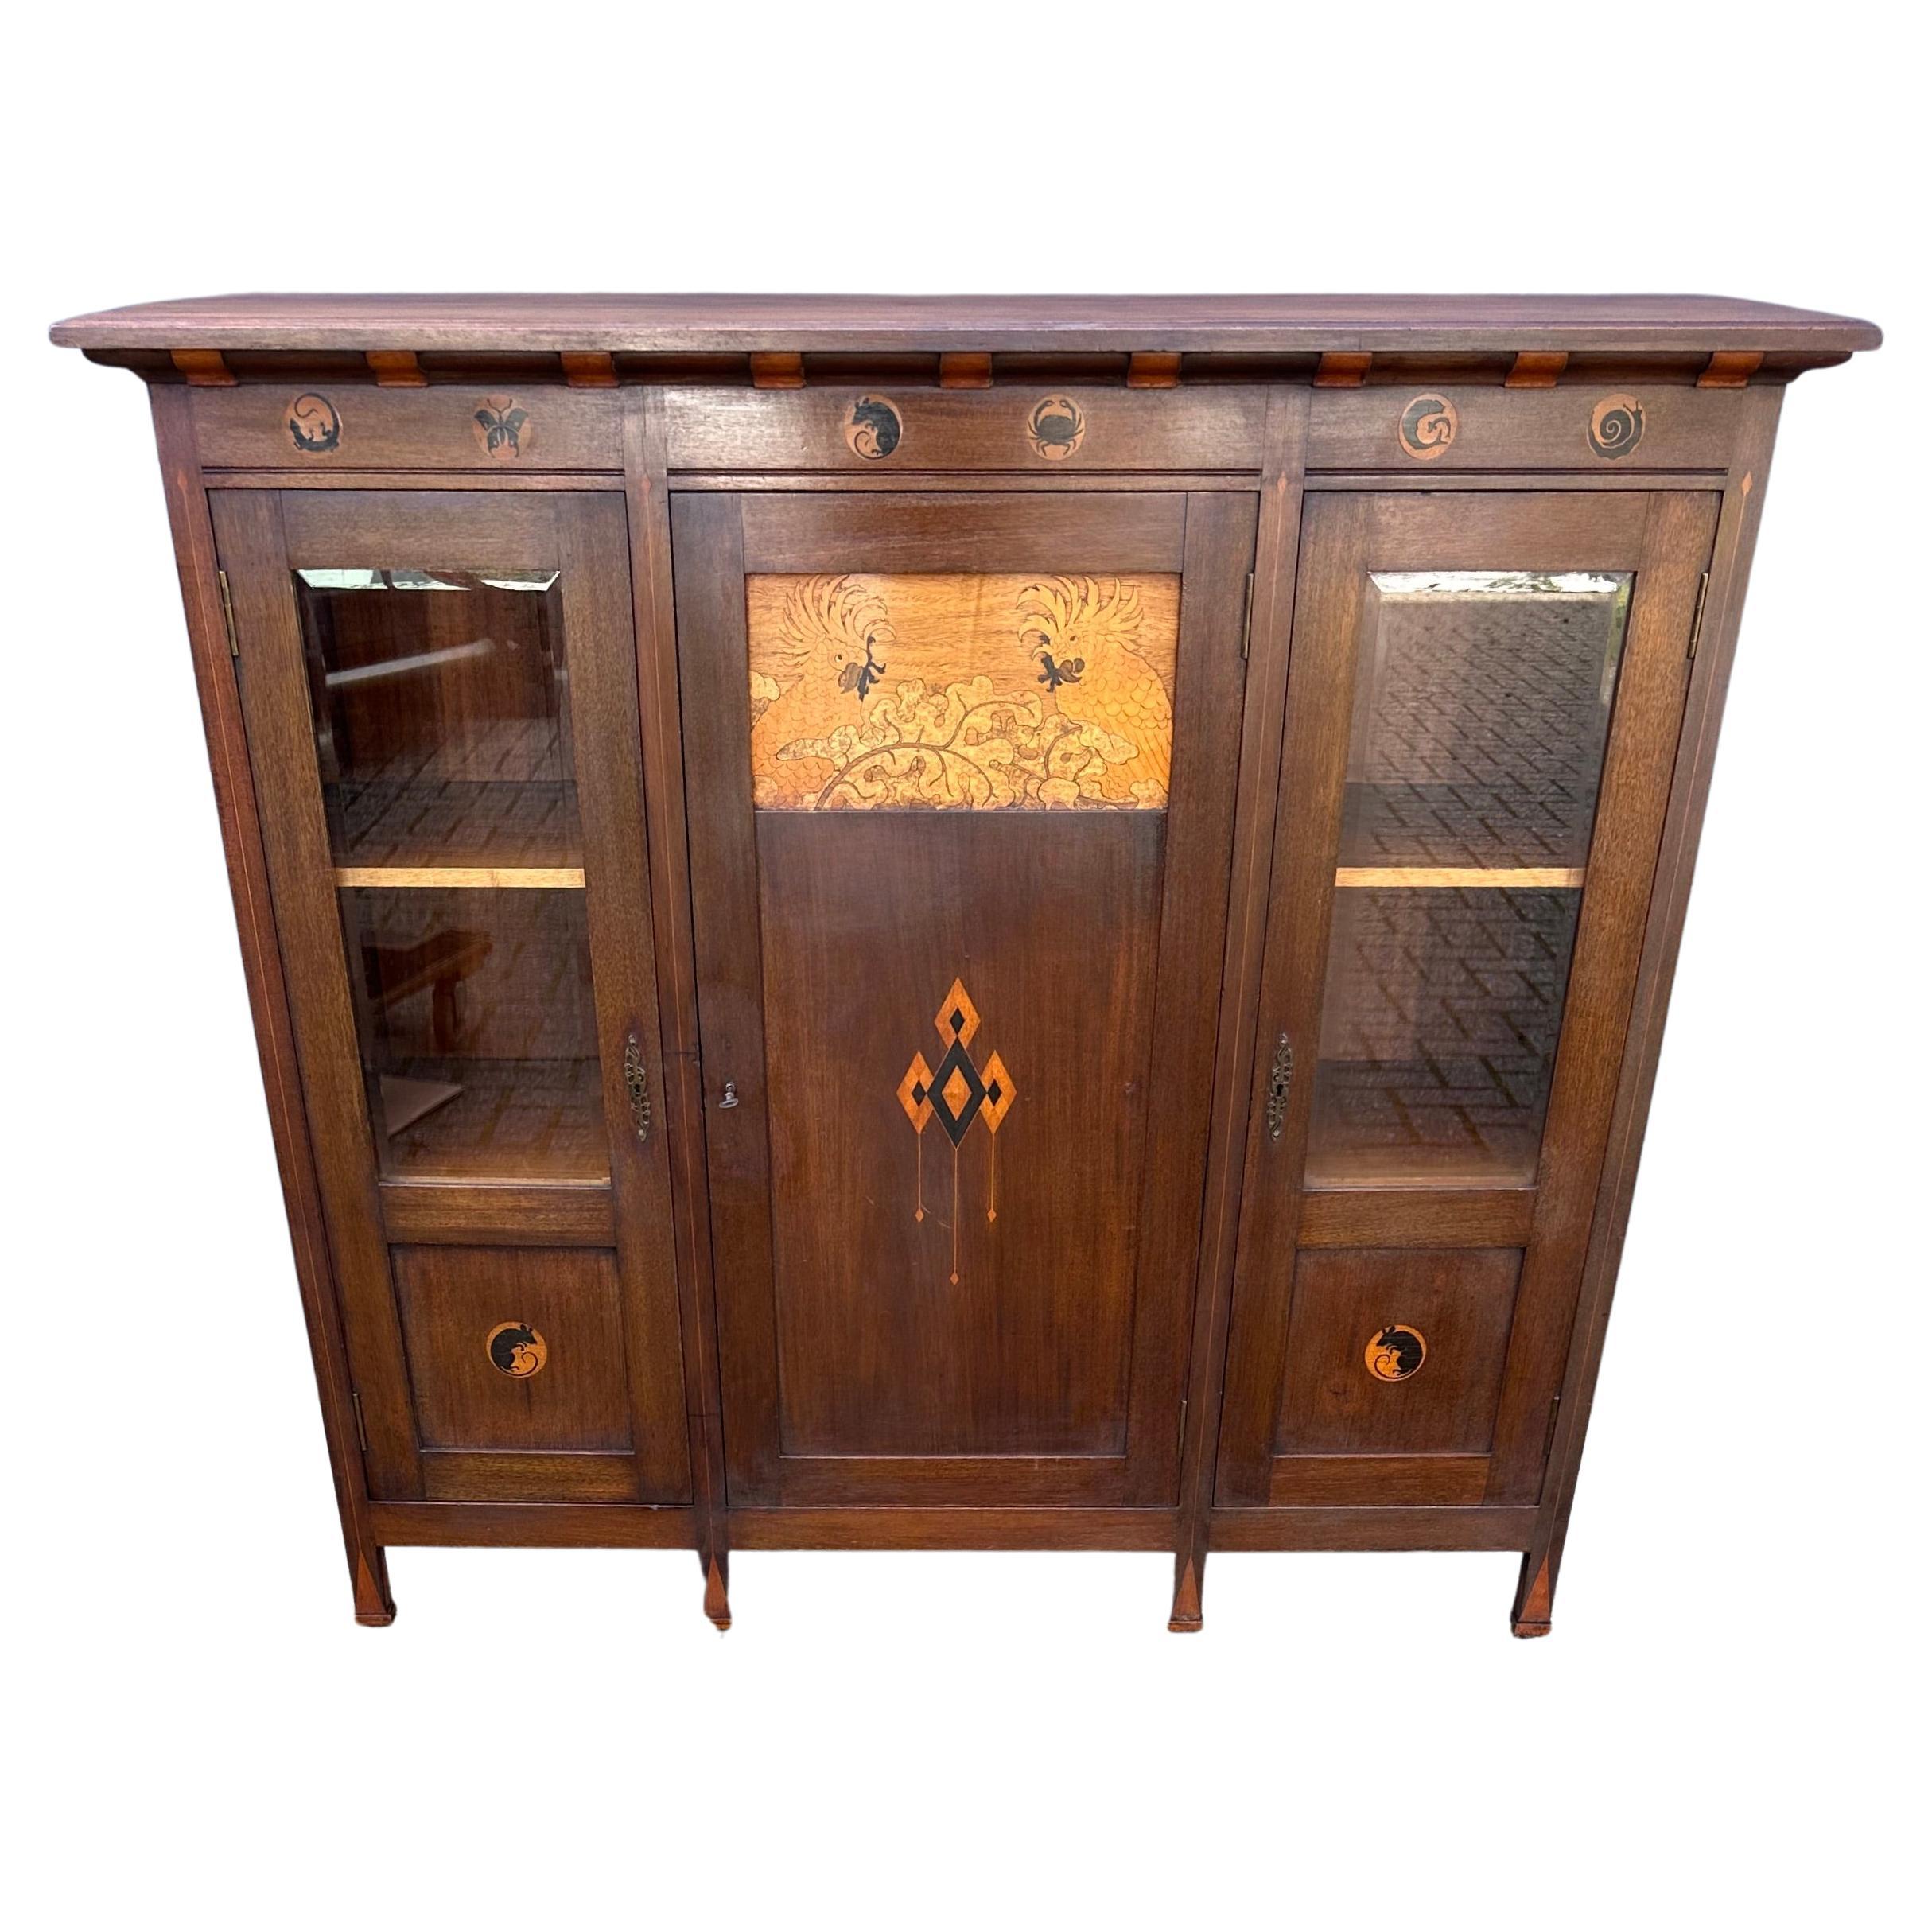 Important & Unique Arts & Crafts Bookcase Sideboard Cabinet by Napoleon Le Grand